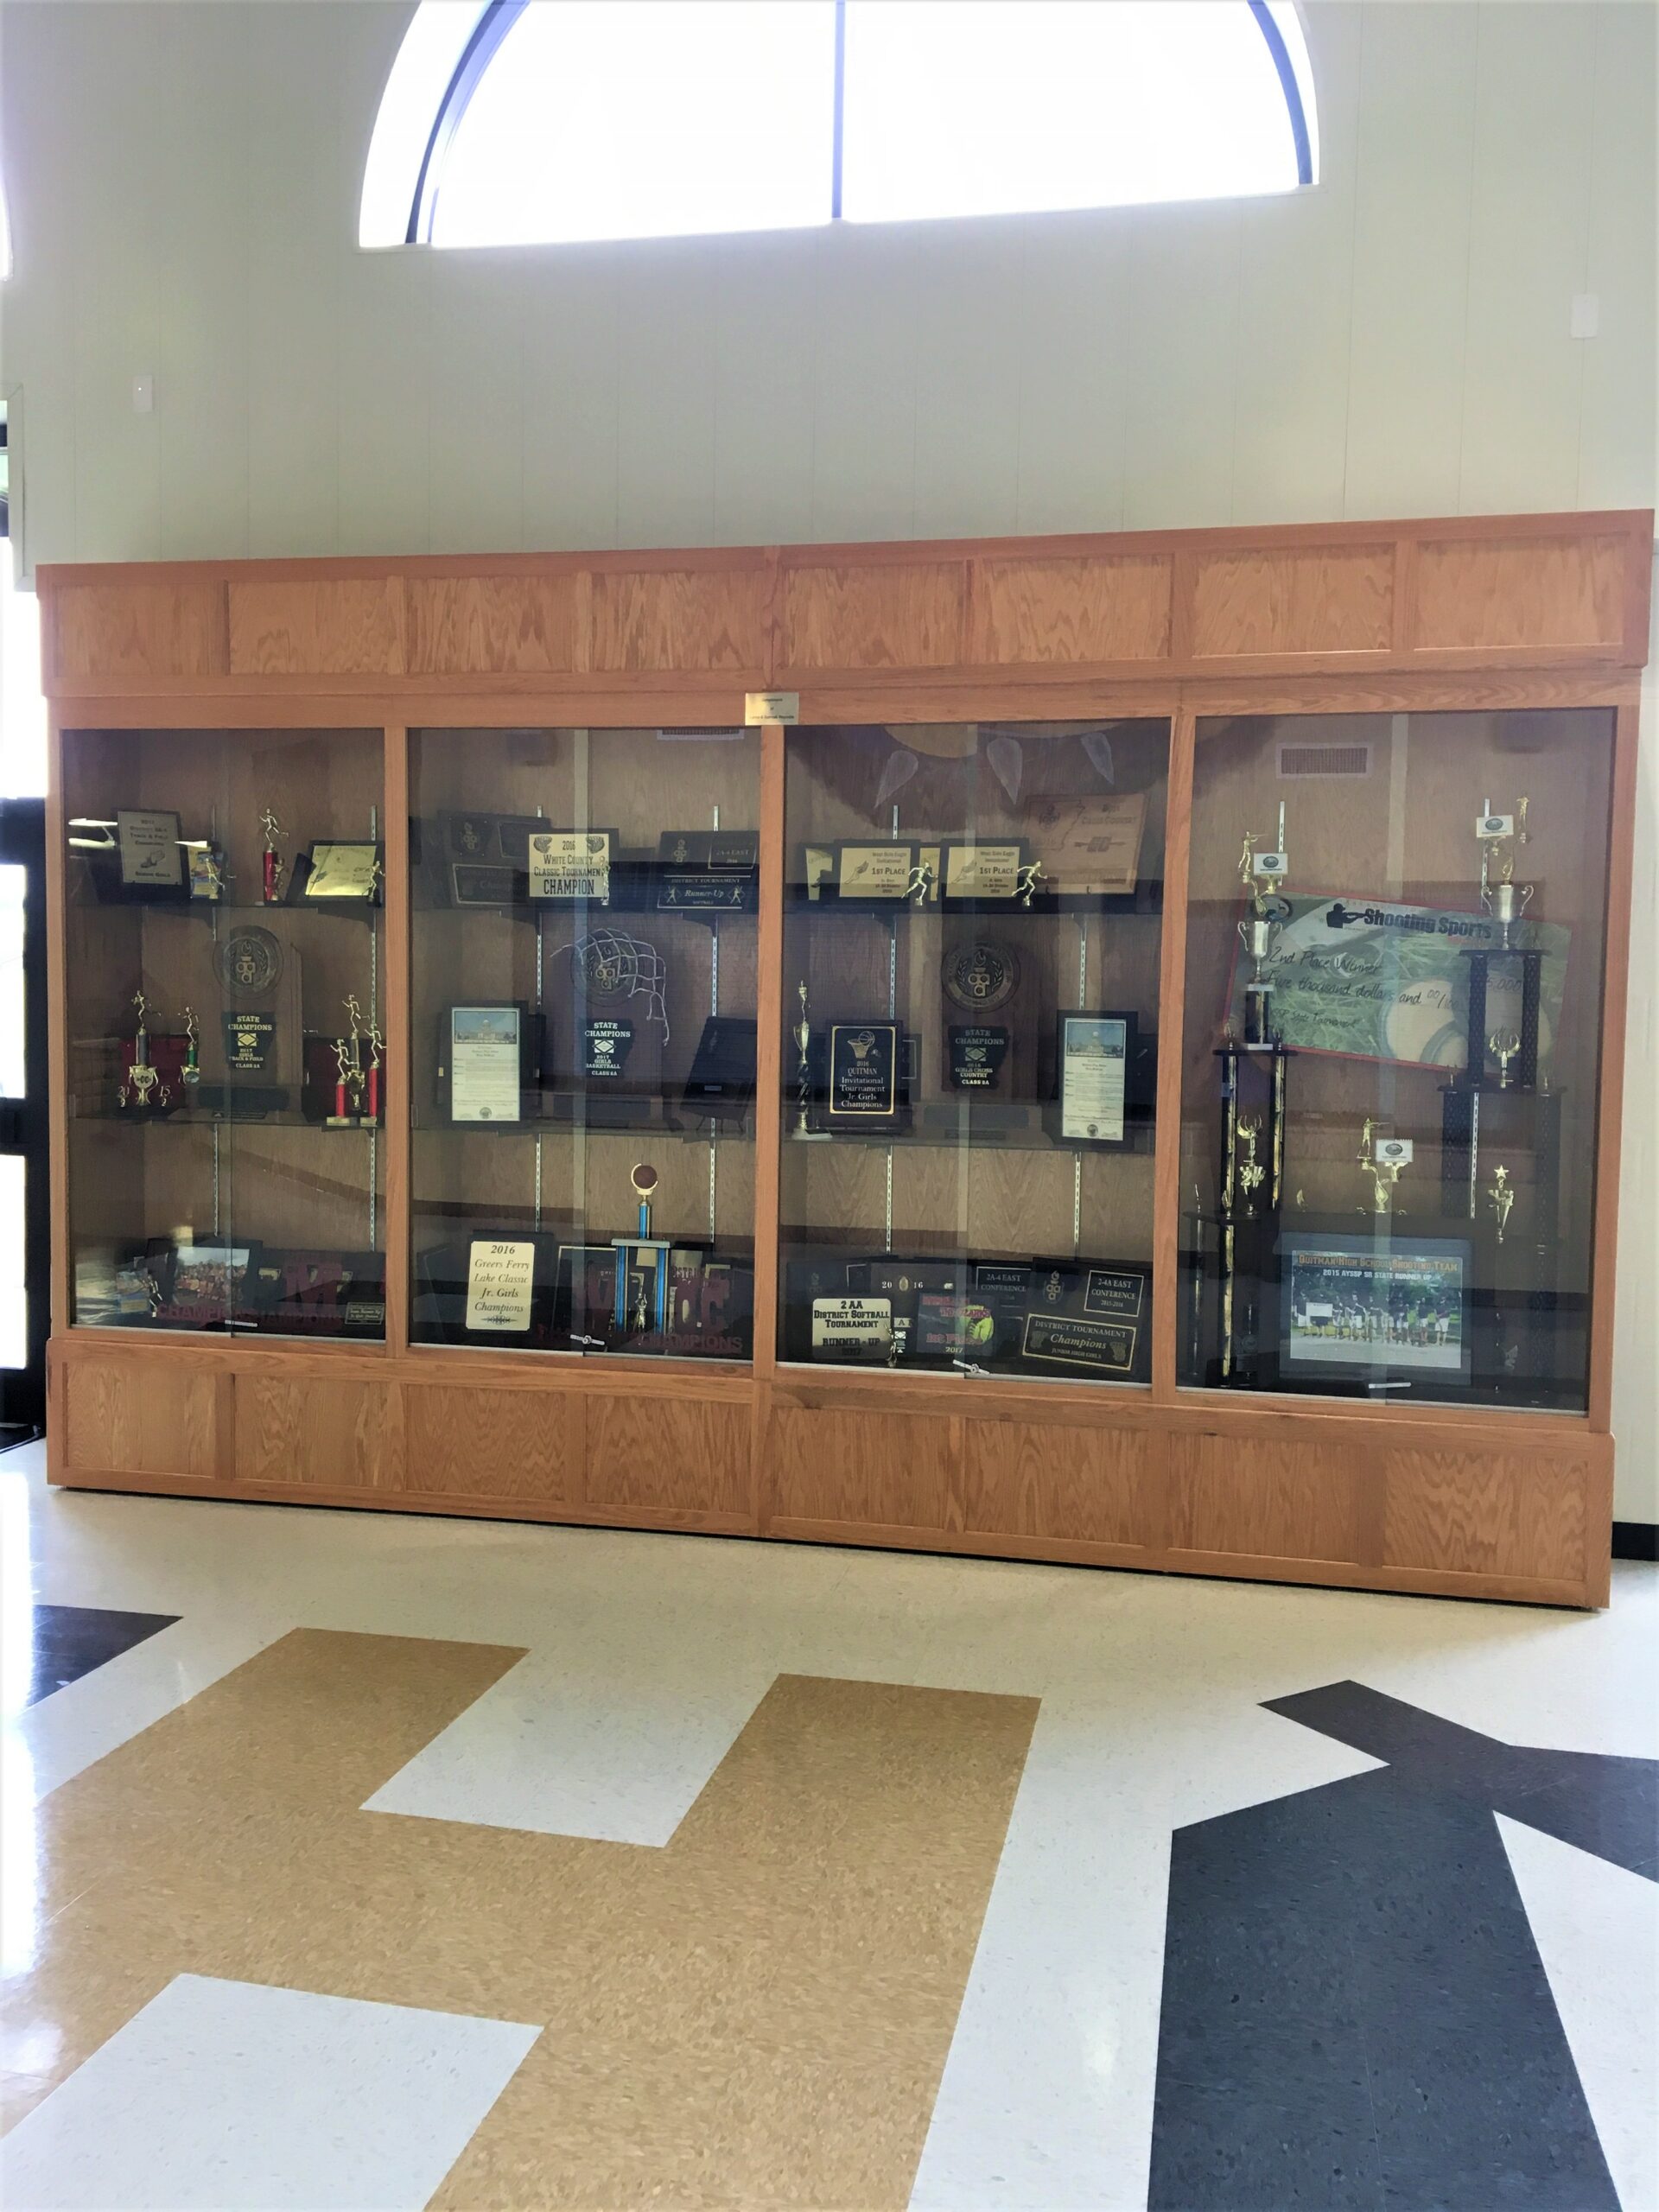 Trophy Case With Sliding Glass Doors - Arkansas Correctional